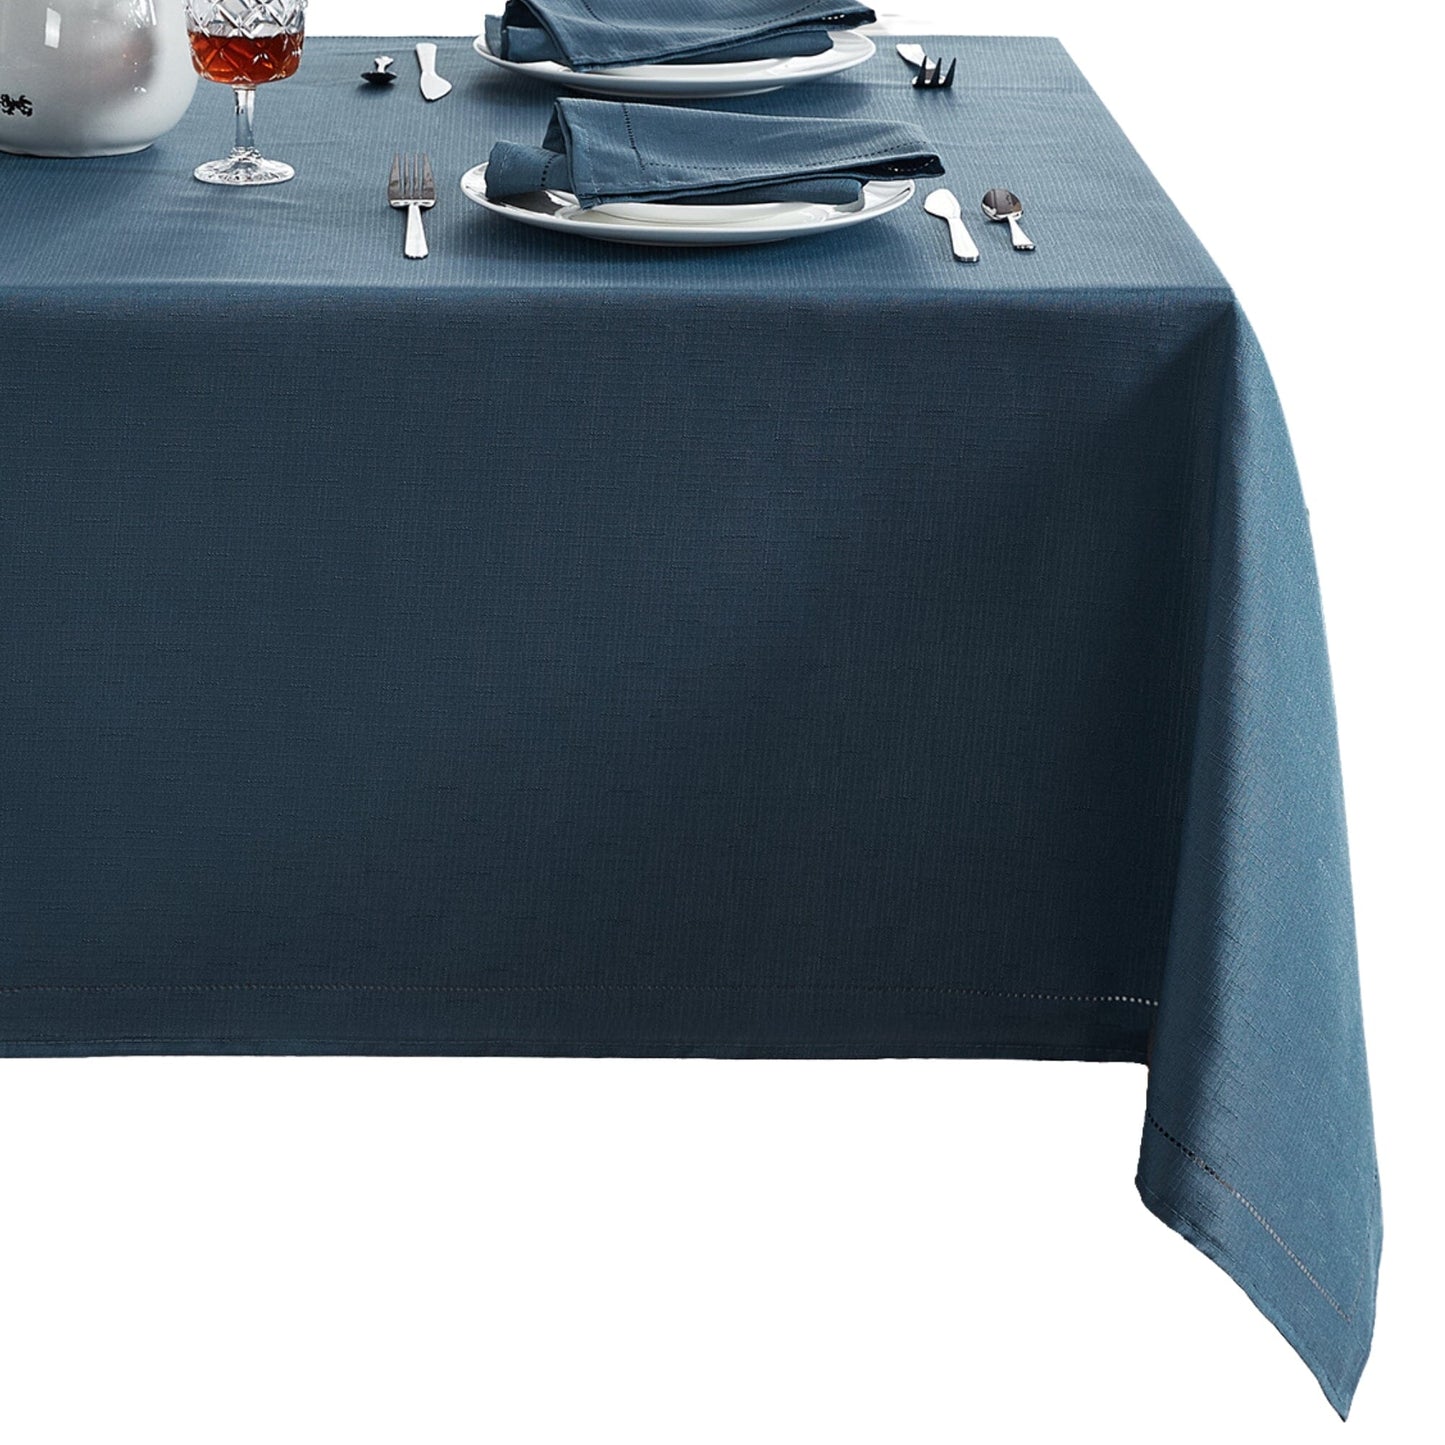 Alison Hemstitch Border Fabric Tablecloth